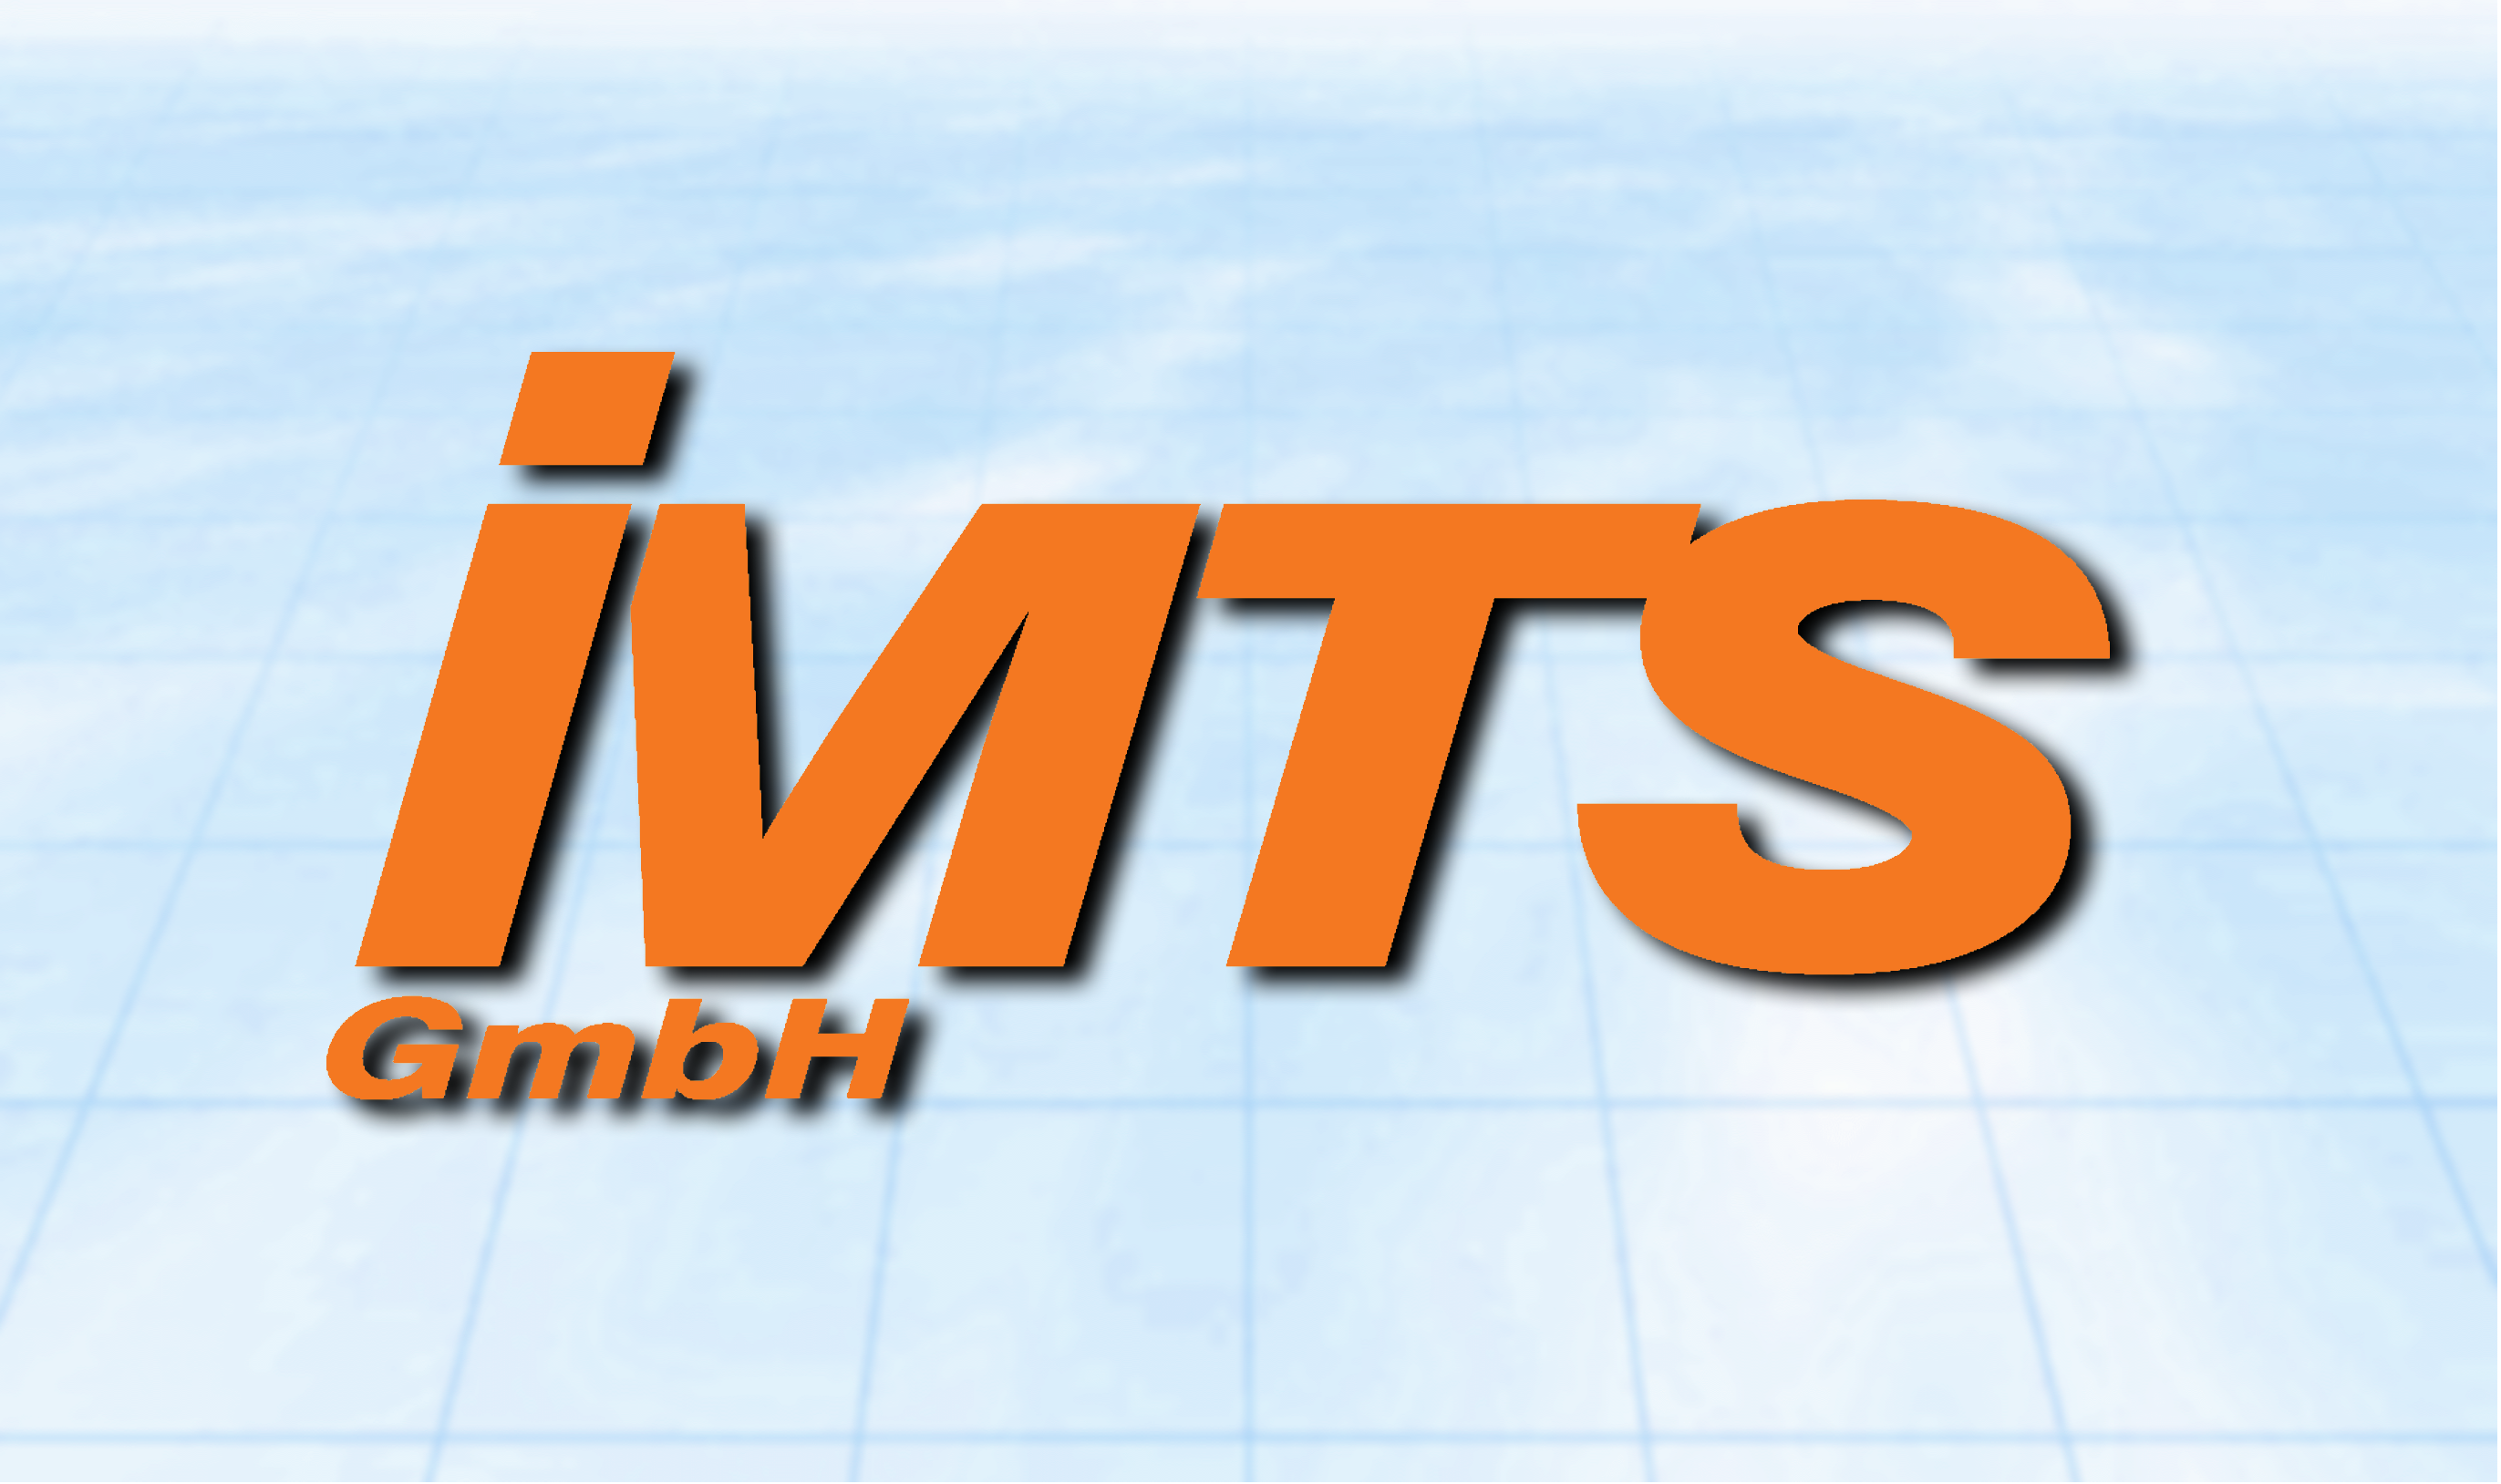 IMTS GmbH